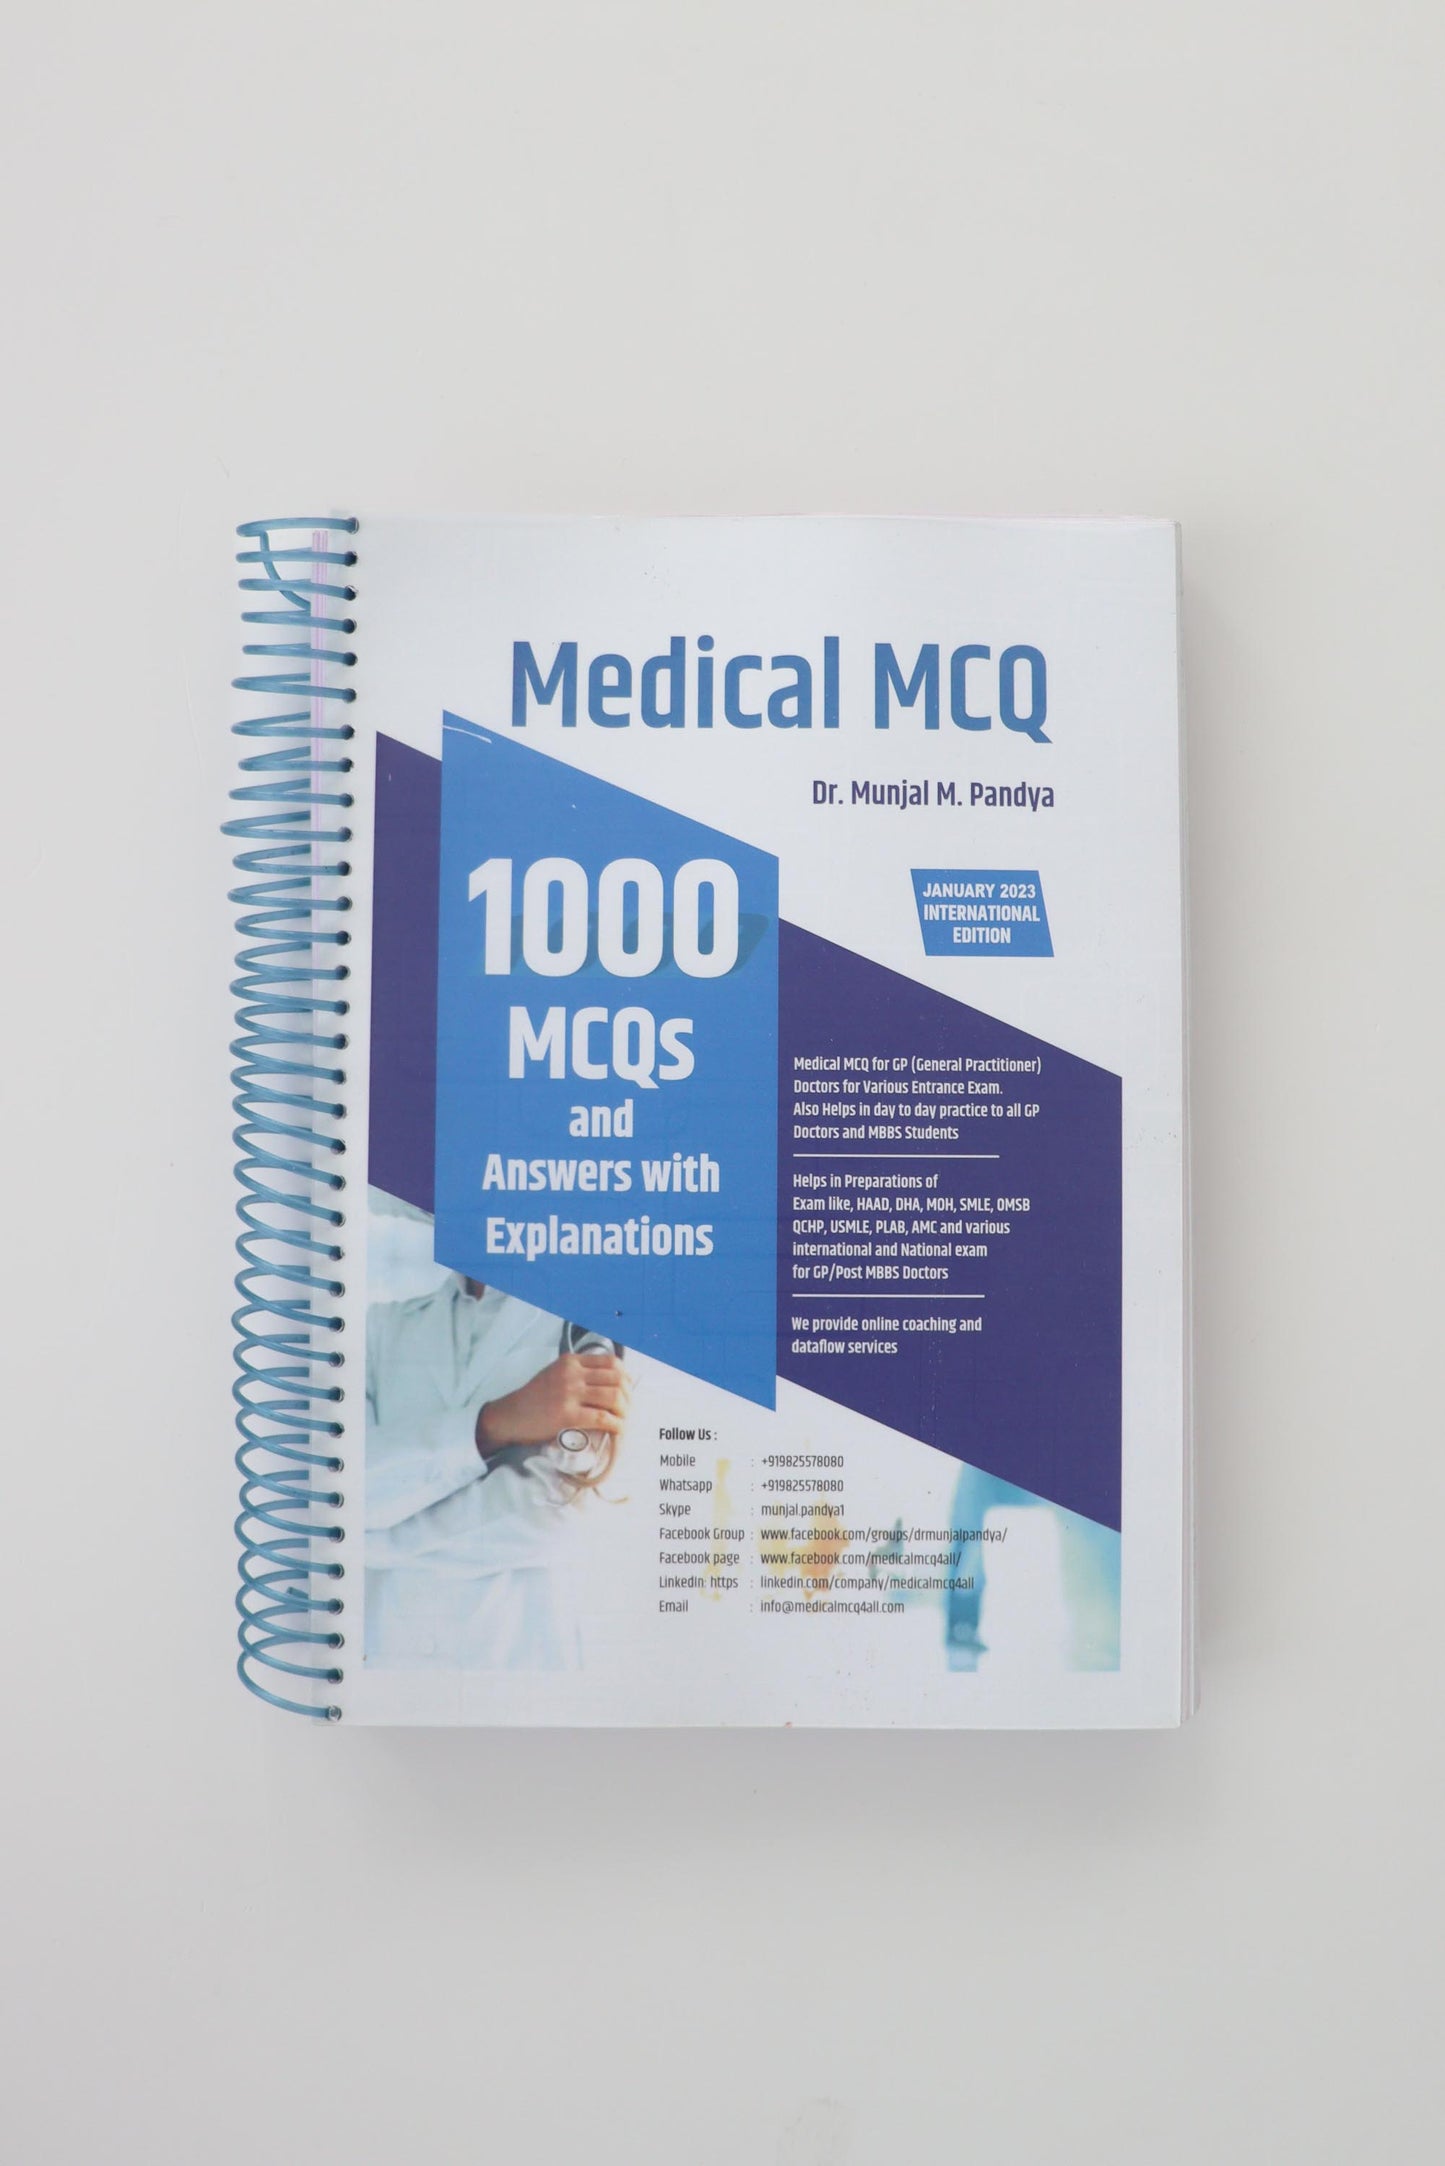 Medical MCQ book by Dr. Munjal M. Pandya